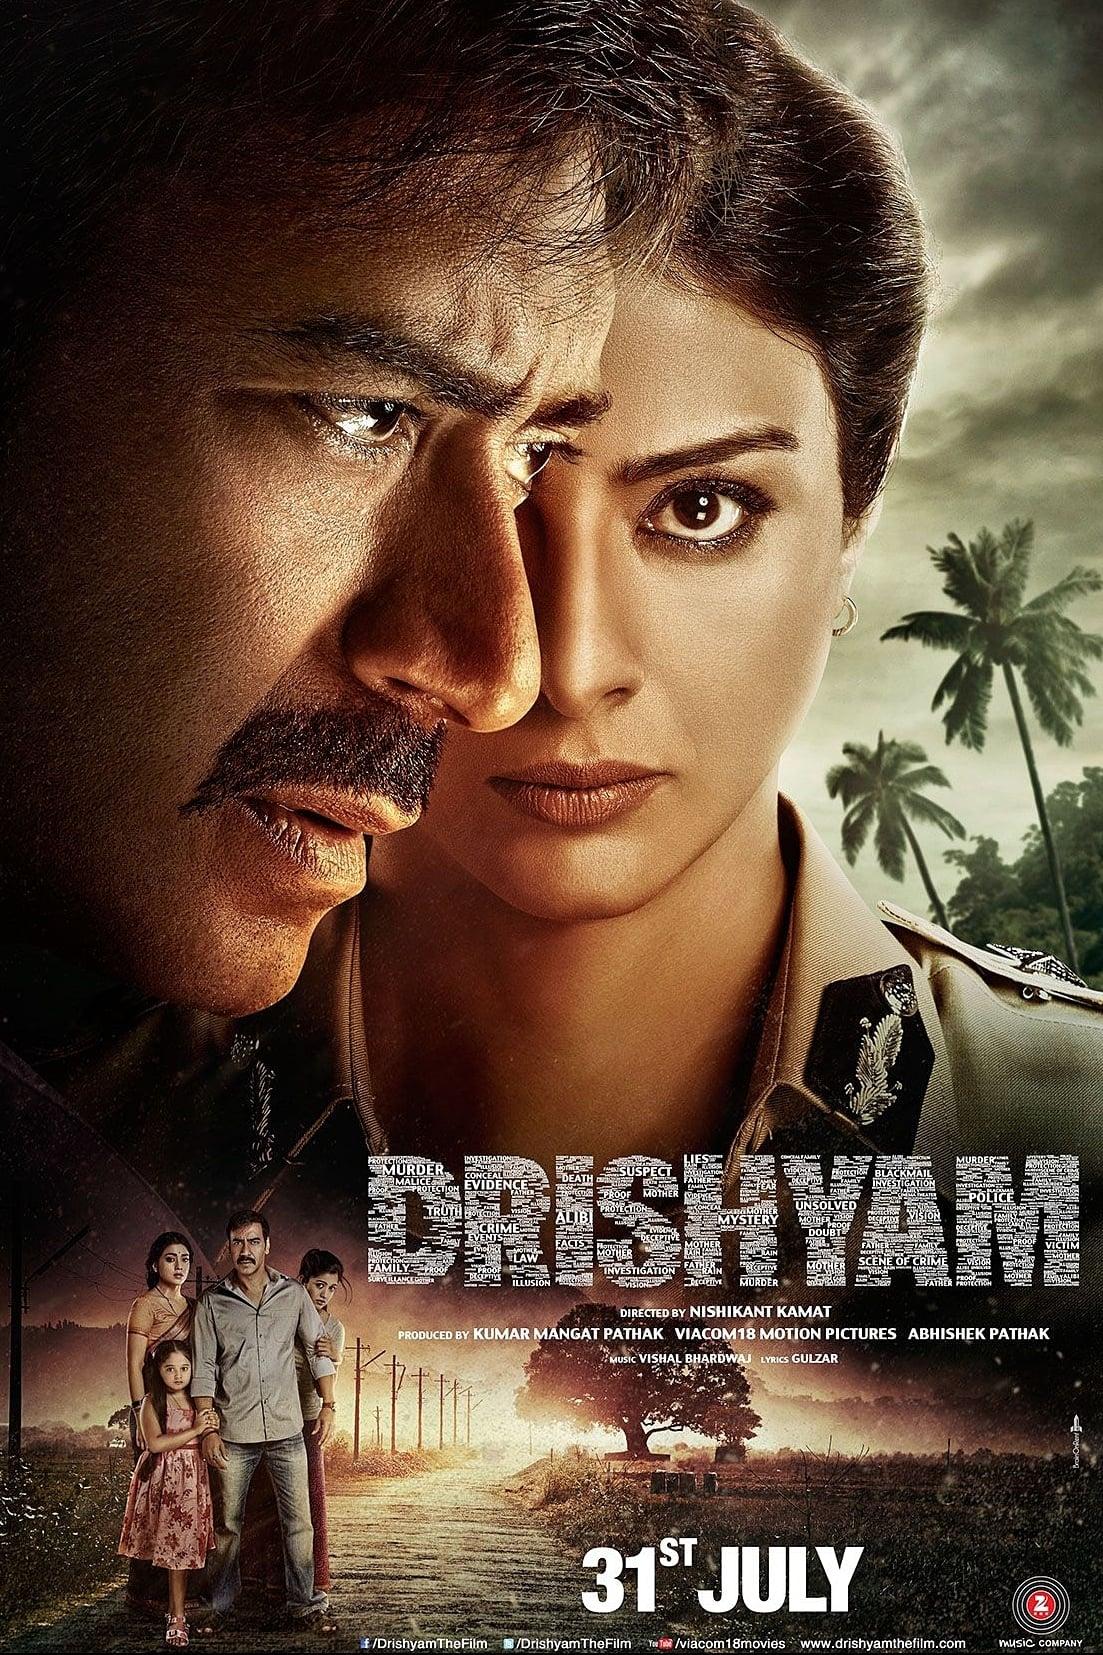 Drishyam poster